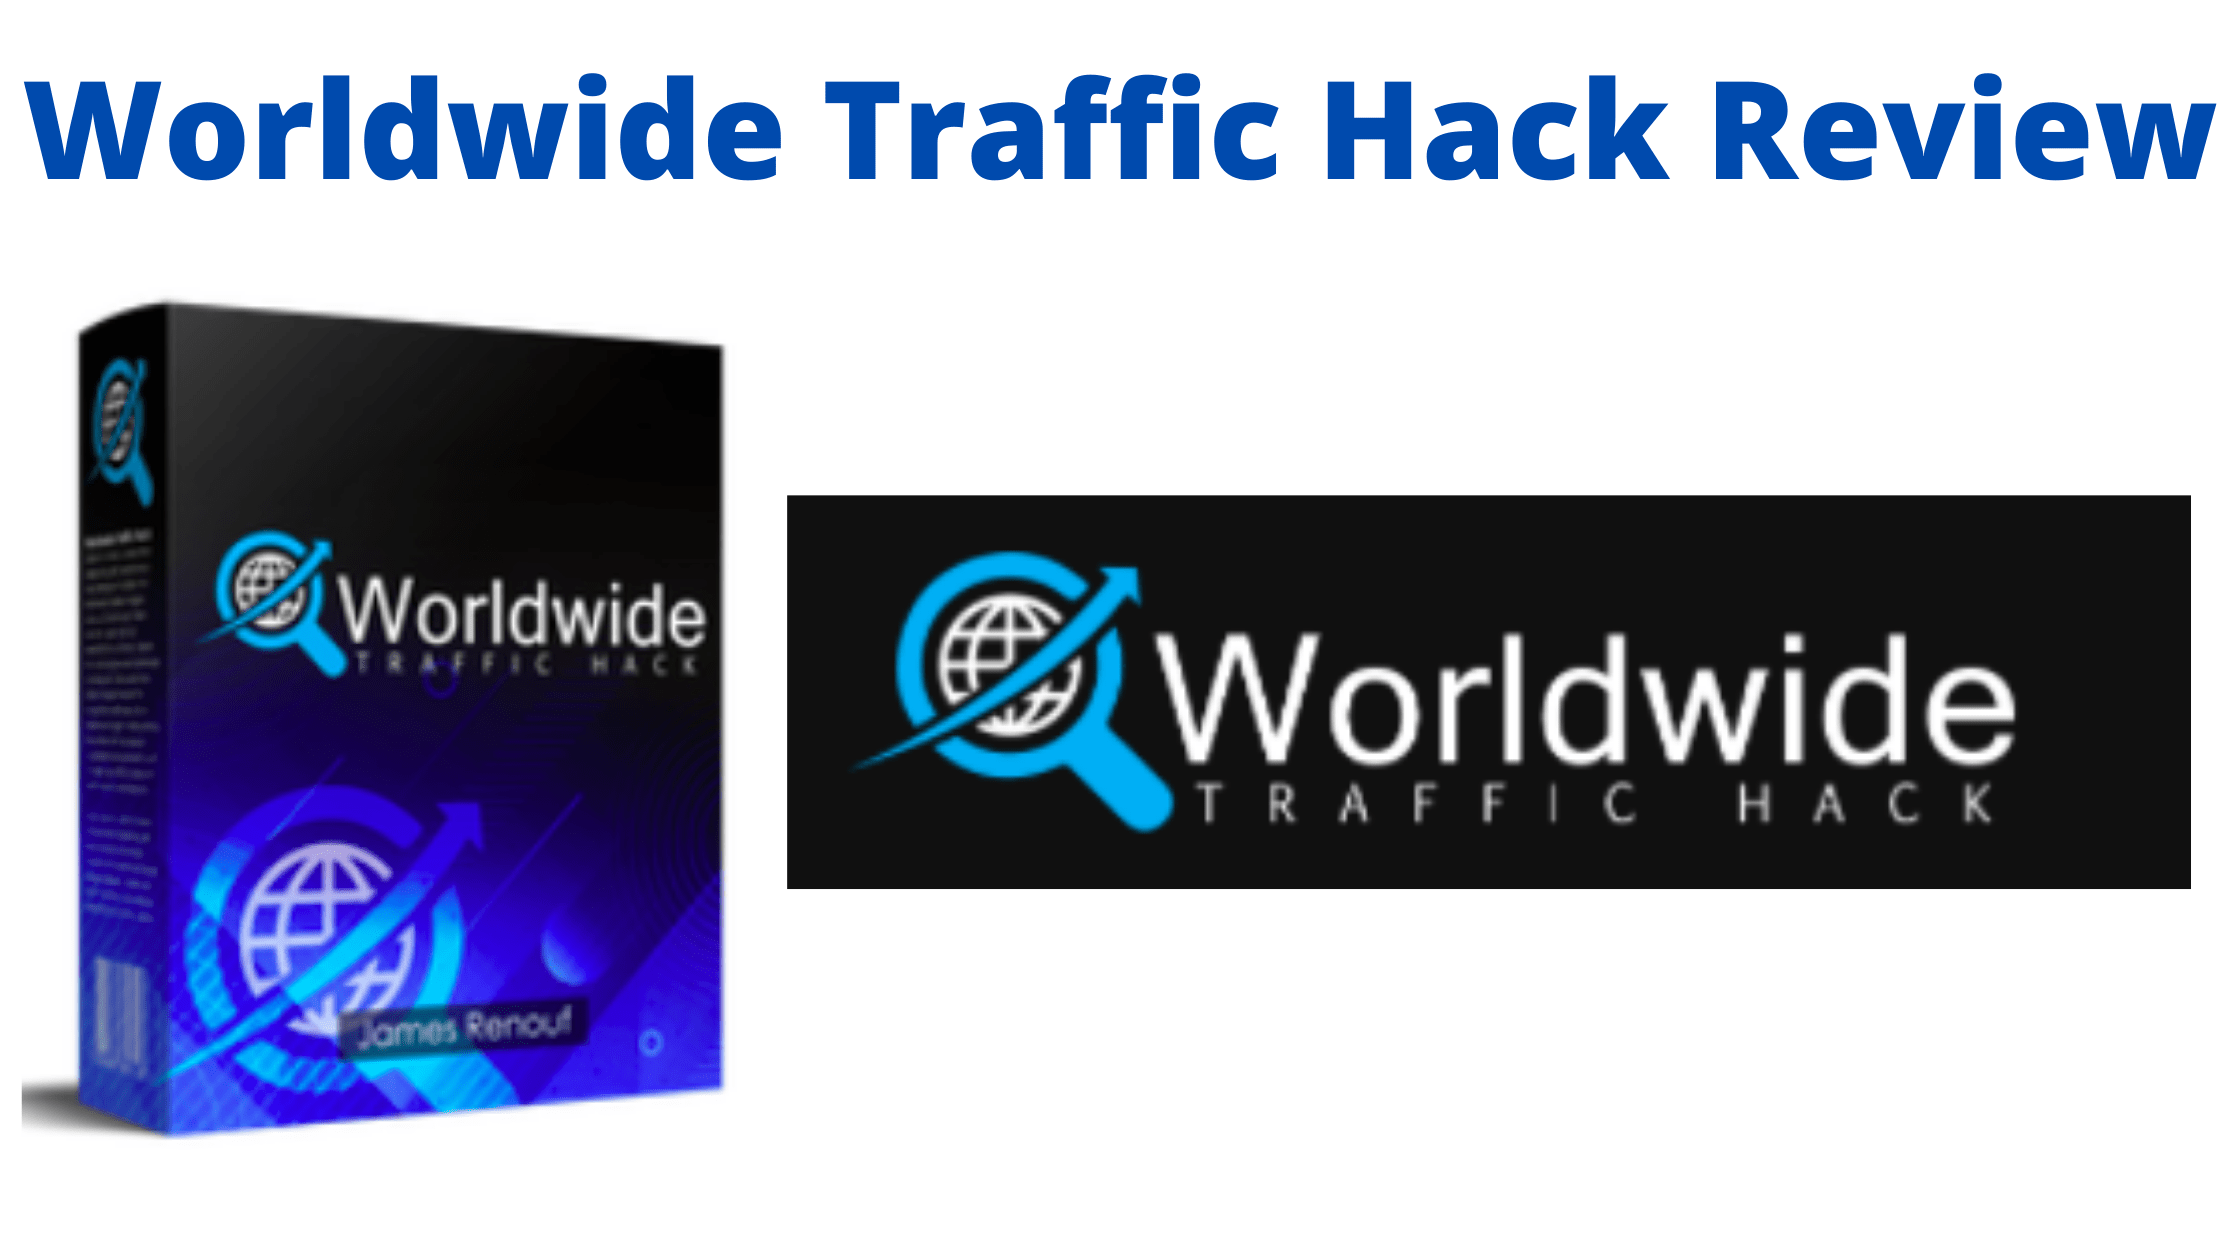 Worldwide Traffic Hack Review